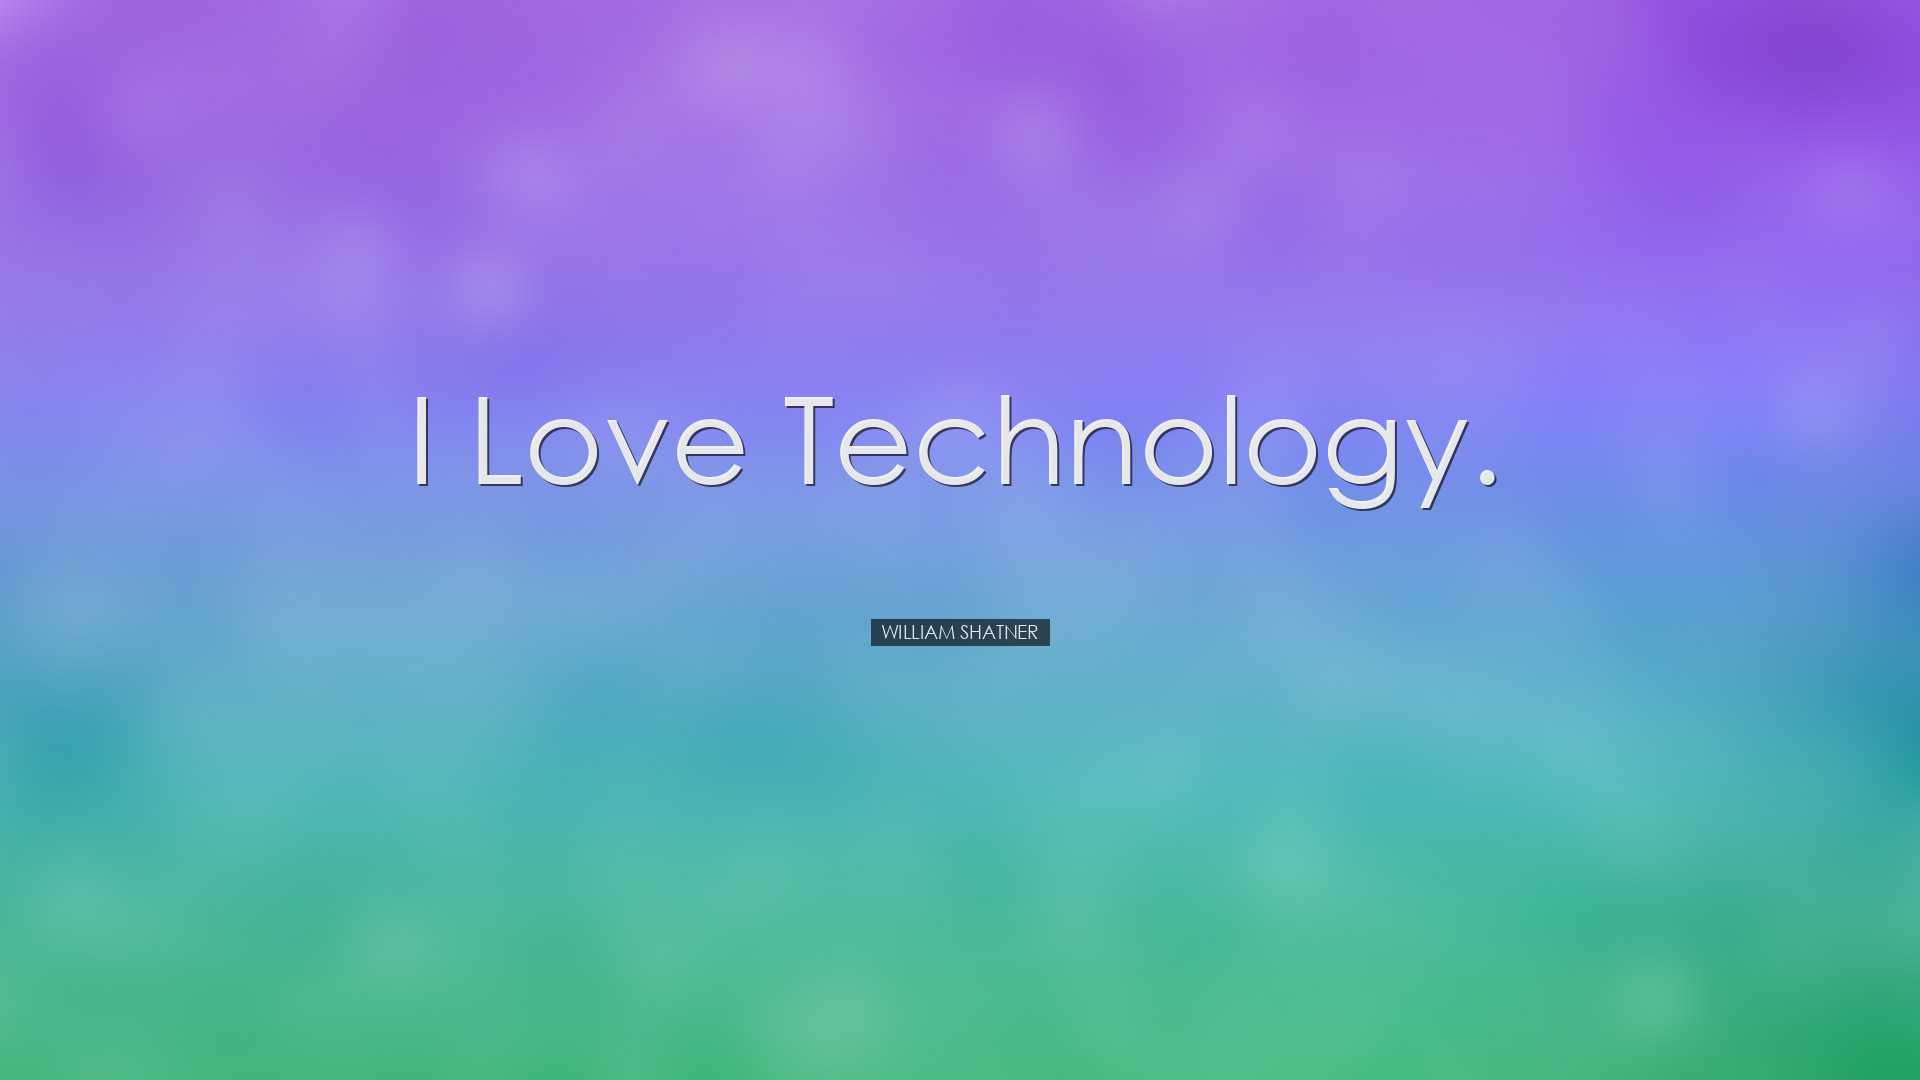 I love technology. - William Shatner